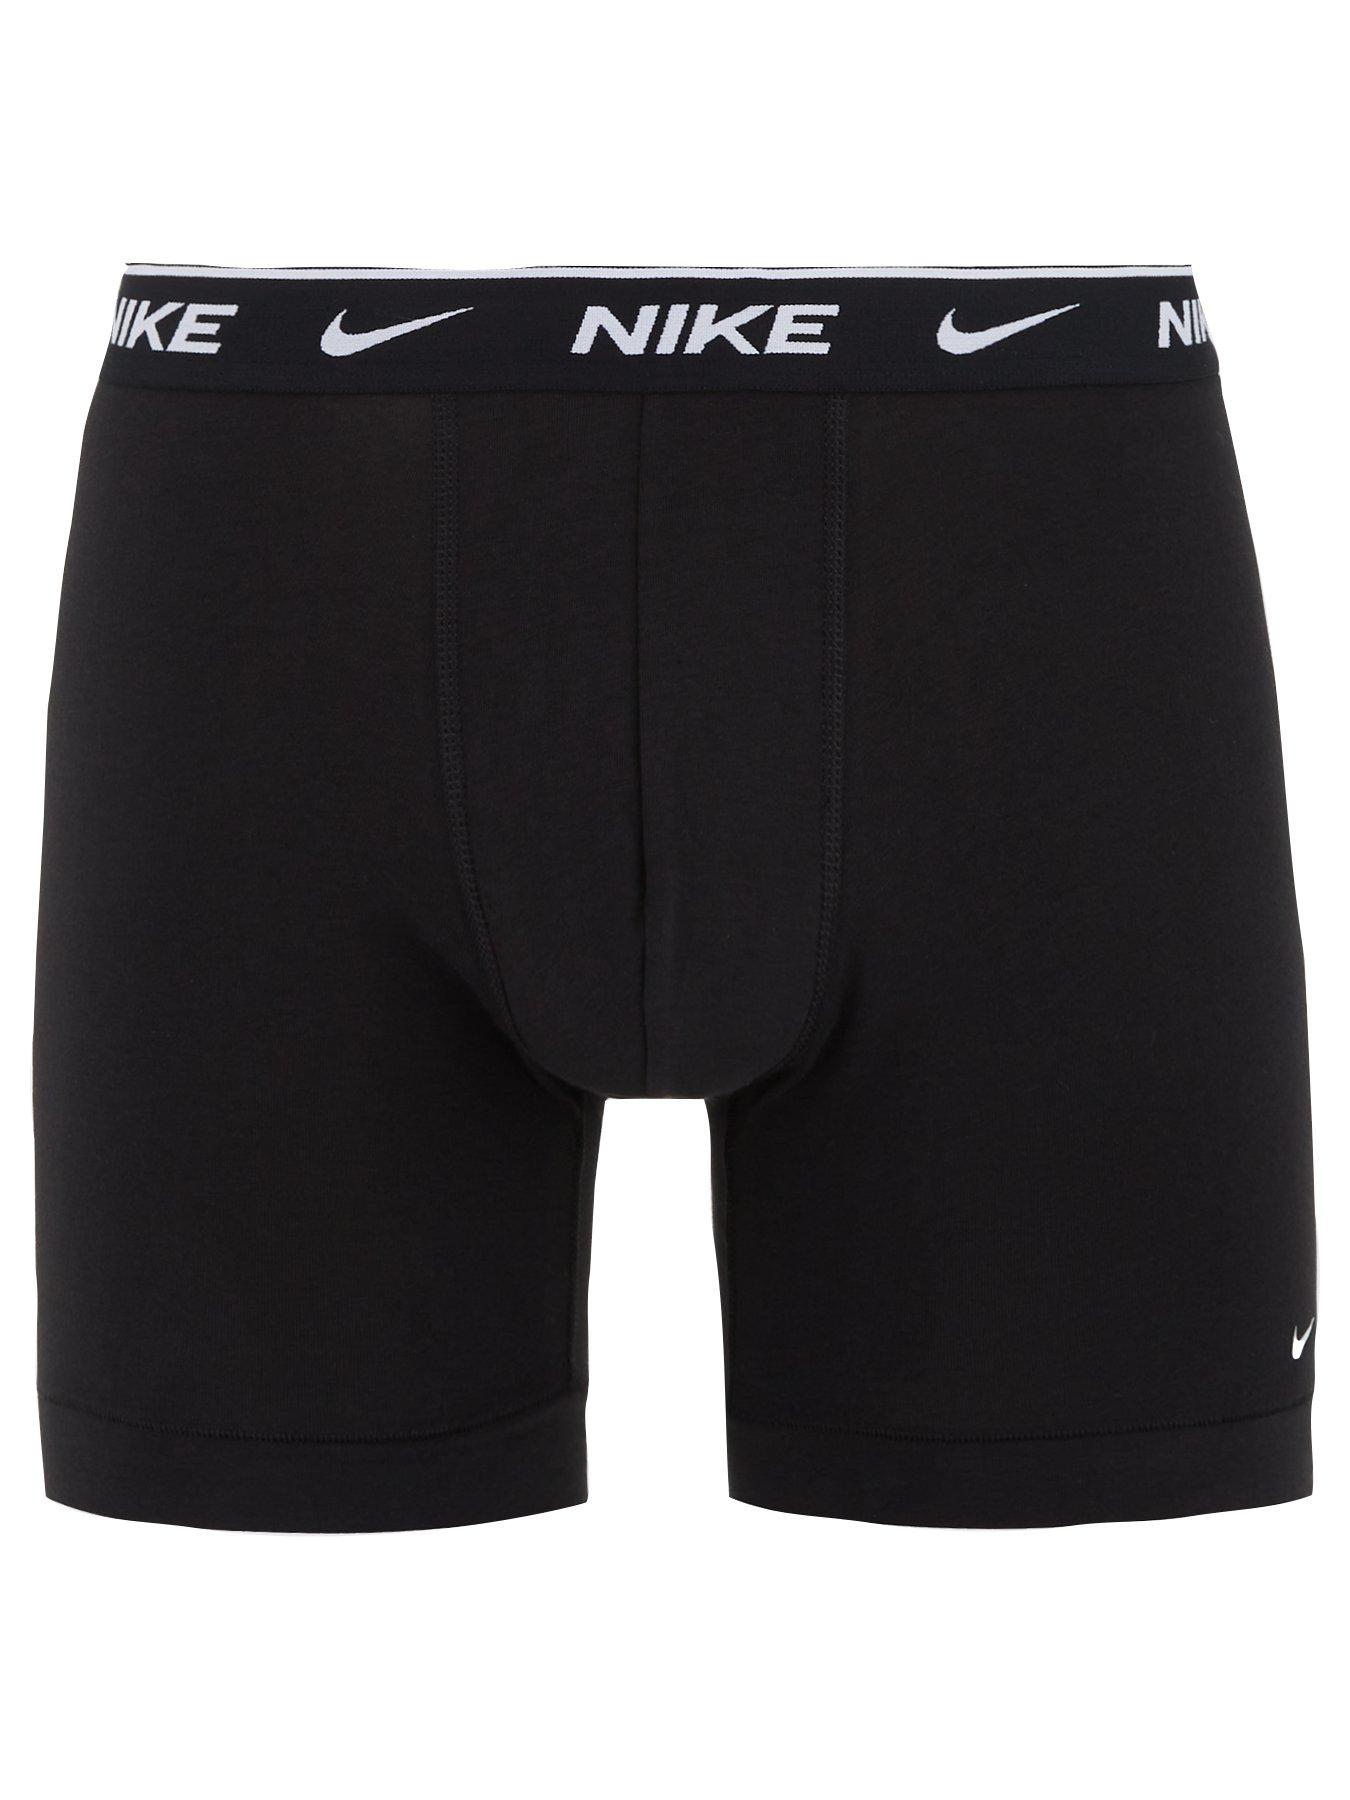 Nike Underwear Nike Everyday Cotton Stretch 3pk Boxer Brief | very.co.uk